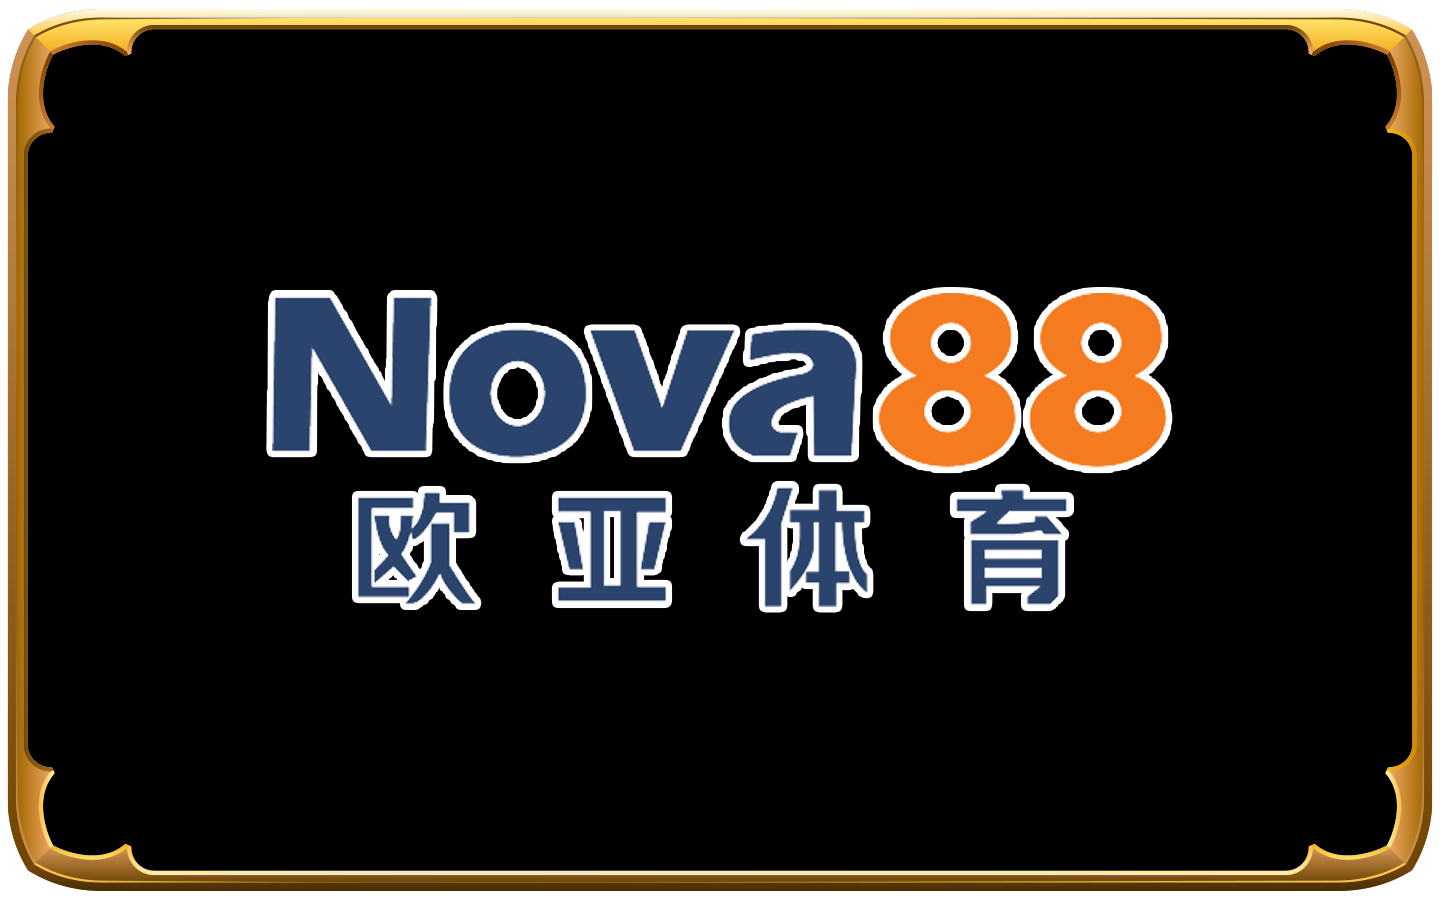 NOVA88